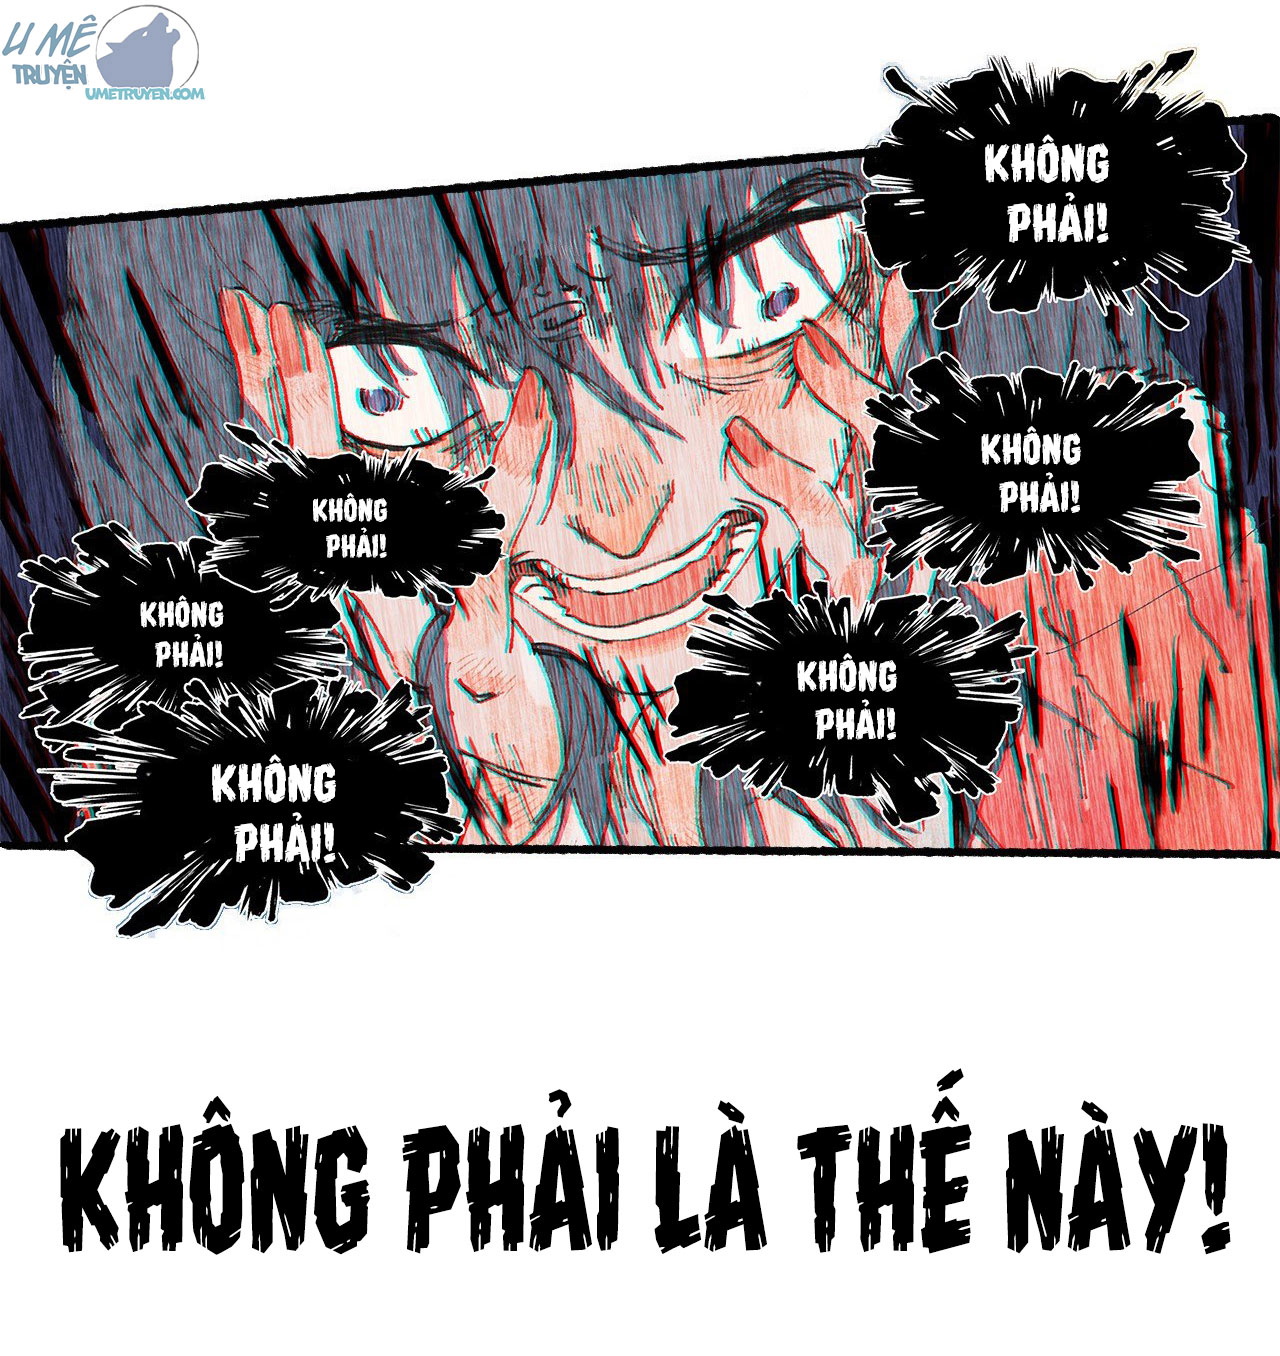 phu-thuy-ngay-nay-khong-dang-tin-nhu-truoc-chap-0-8